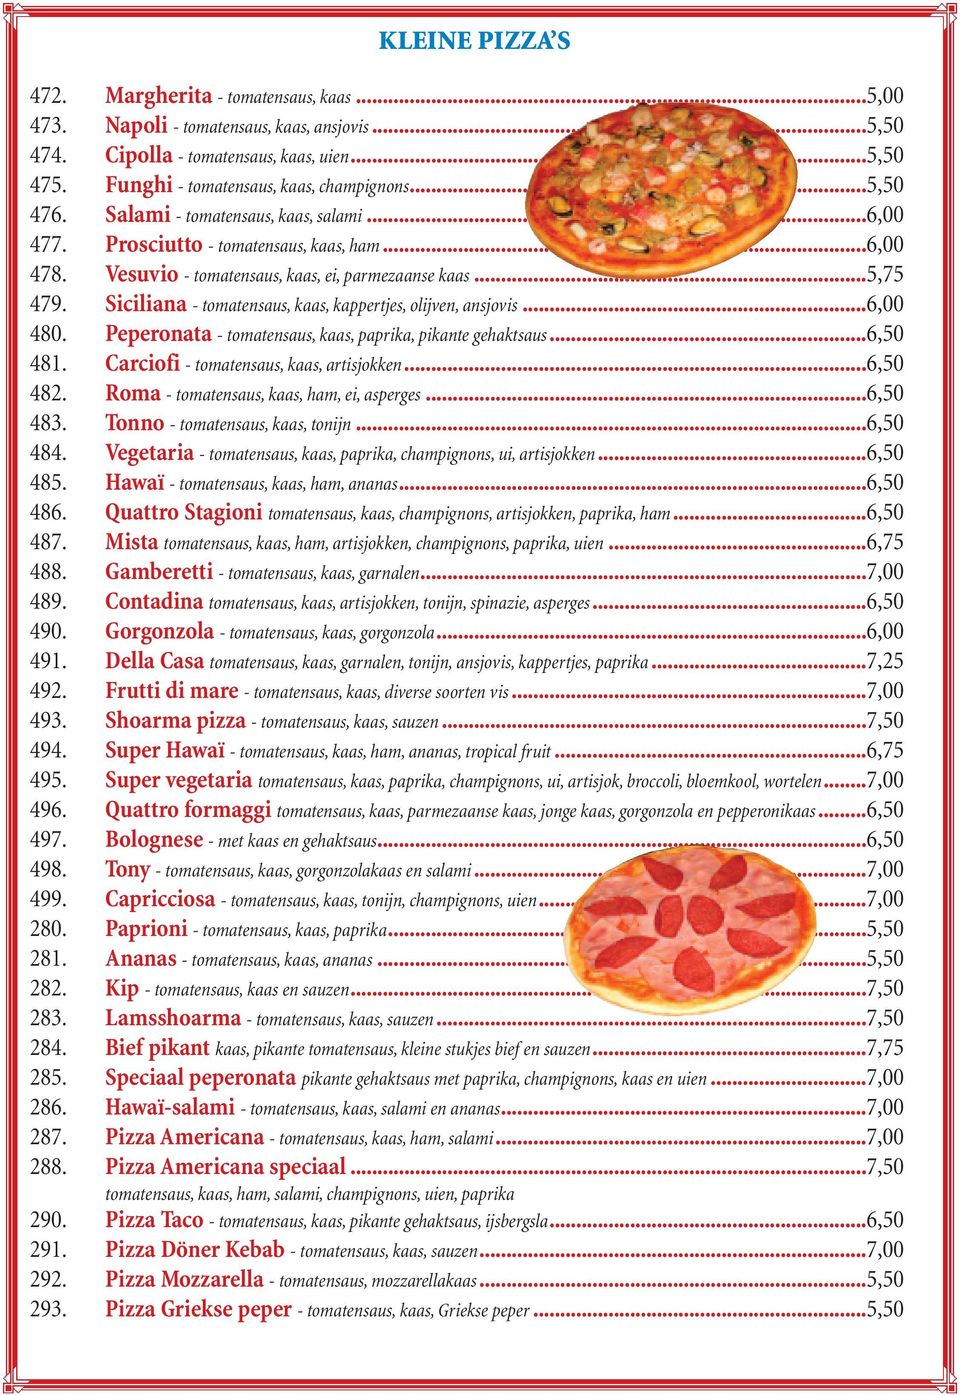 Siciliana - tomatensaus, kaas, kappertjes, olijven, ansjovis...6,00 480. Peperonata - tomatensaus, kaas, paprika, pikante gehaktsaus...6,50 481. Carciofi - tomatensaus, kaas, artisjokken...6,50 482.